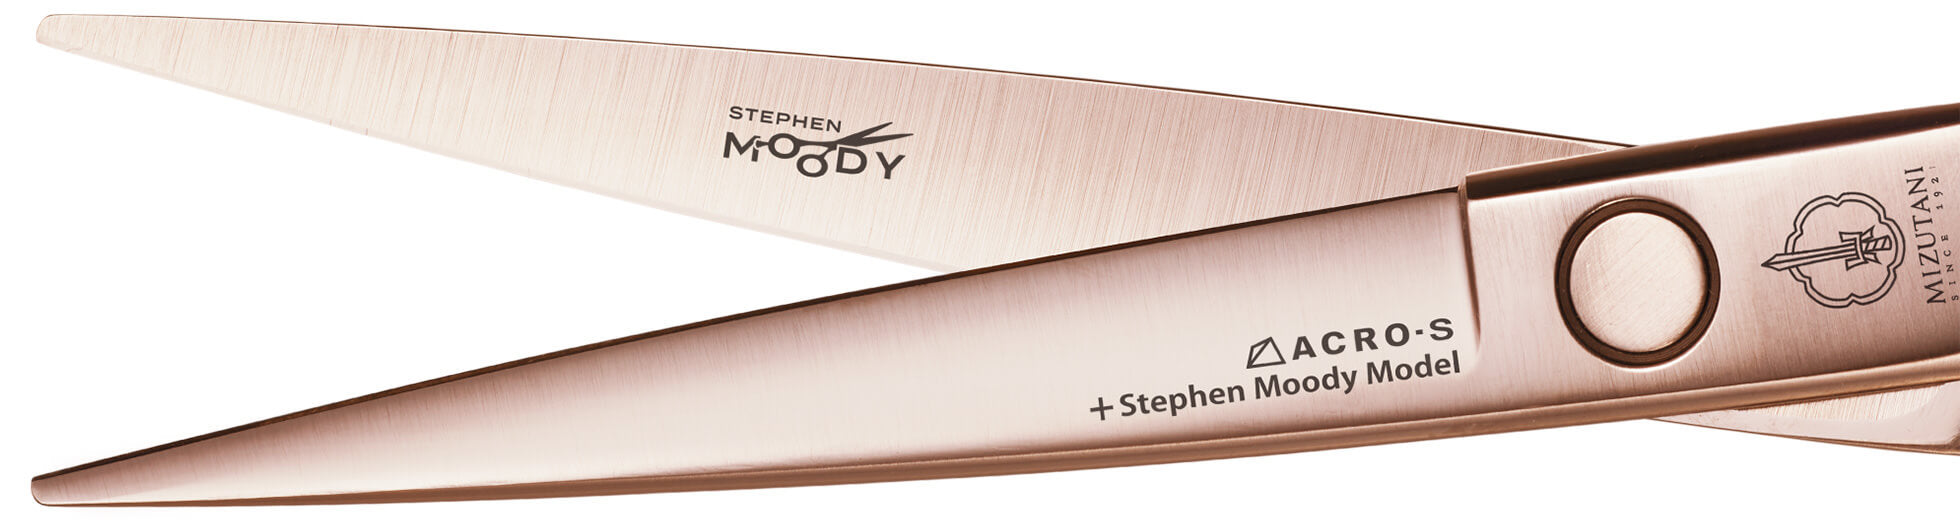 Mizutani Scissors Canada ACRO Stephen Moody scissors blades rose gold